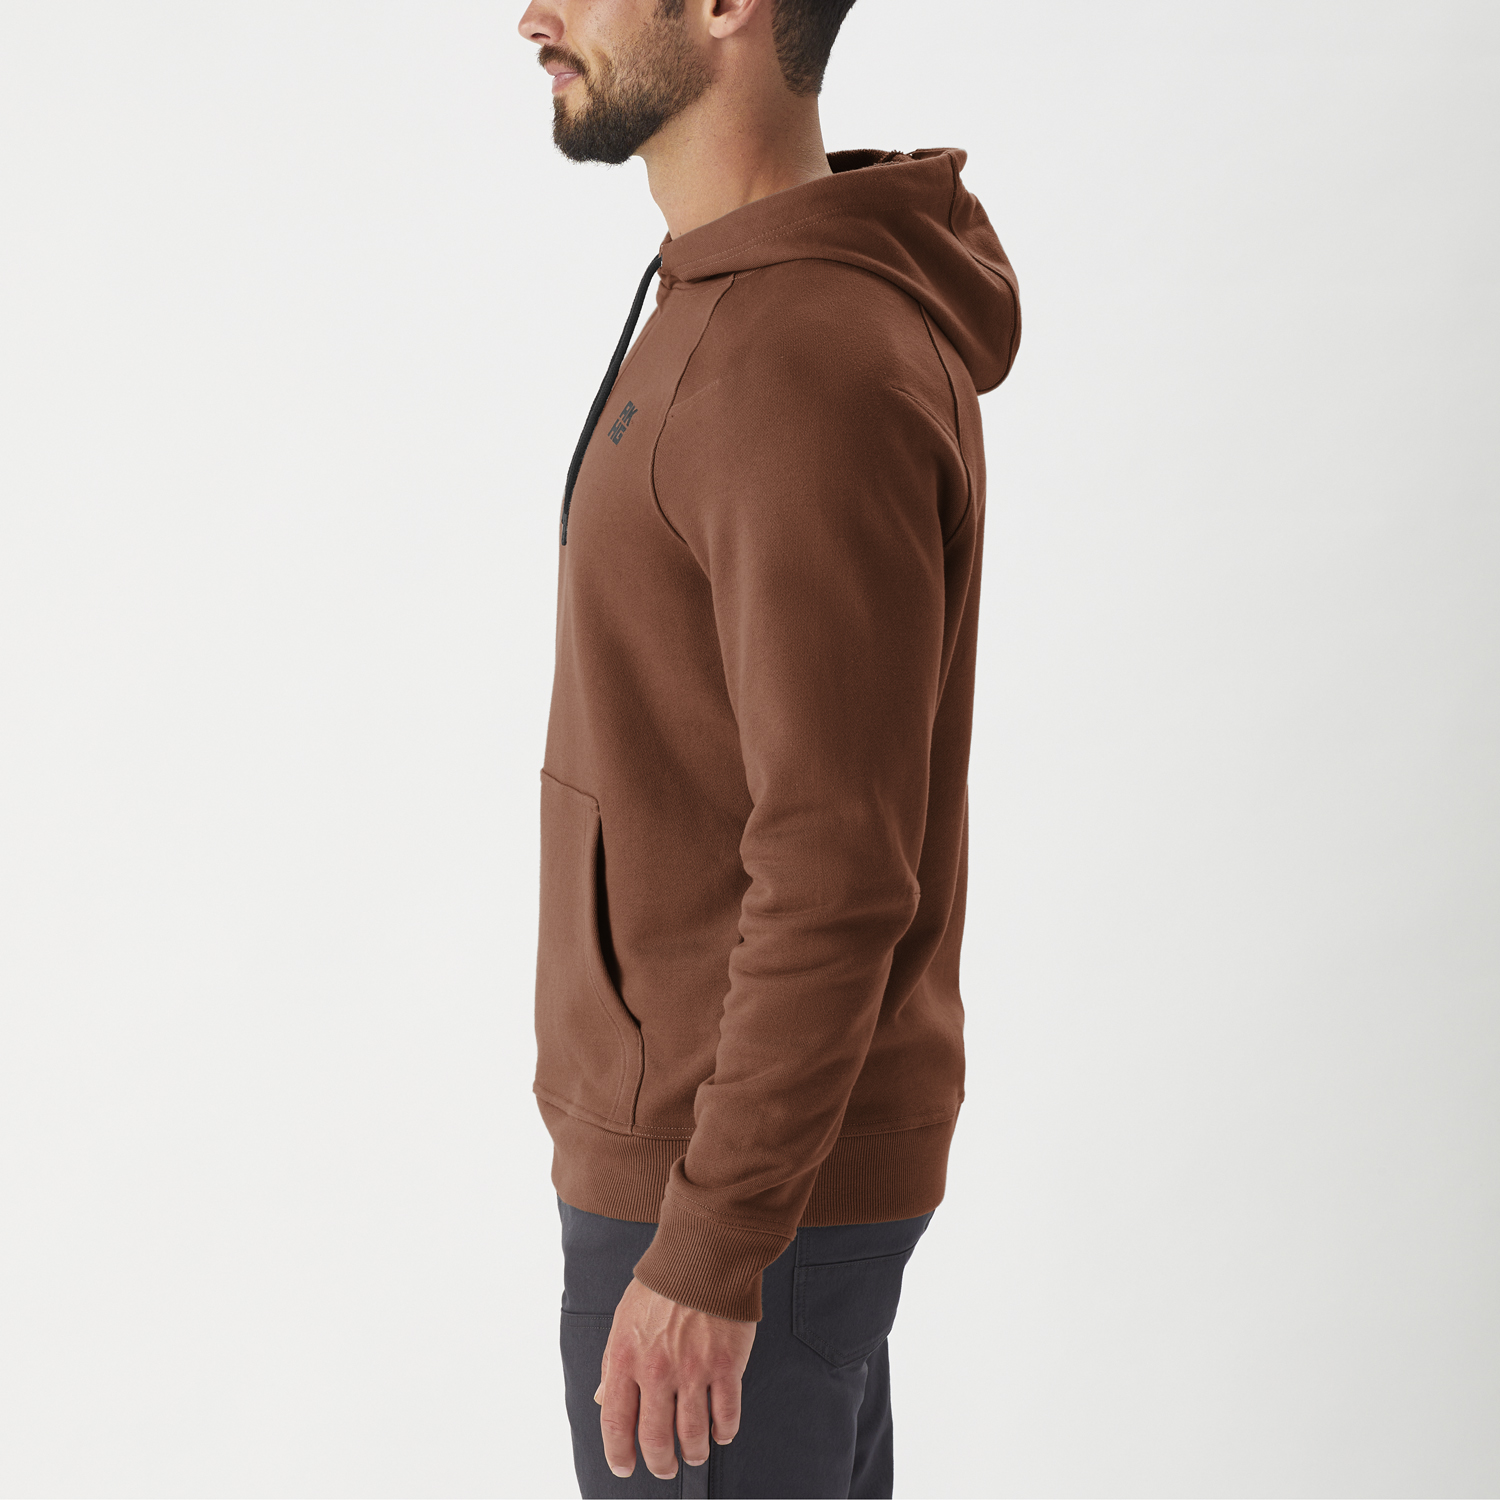 Men's AKHG Crosshaul Cotton Standard Fit Hoodie Sweatshirt